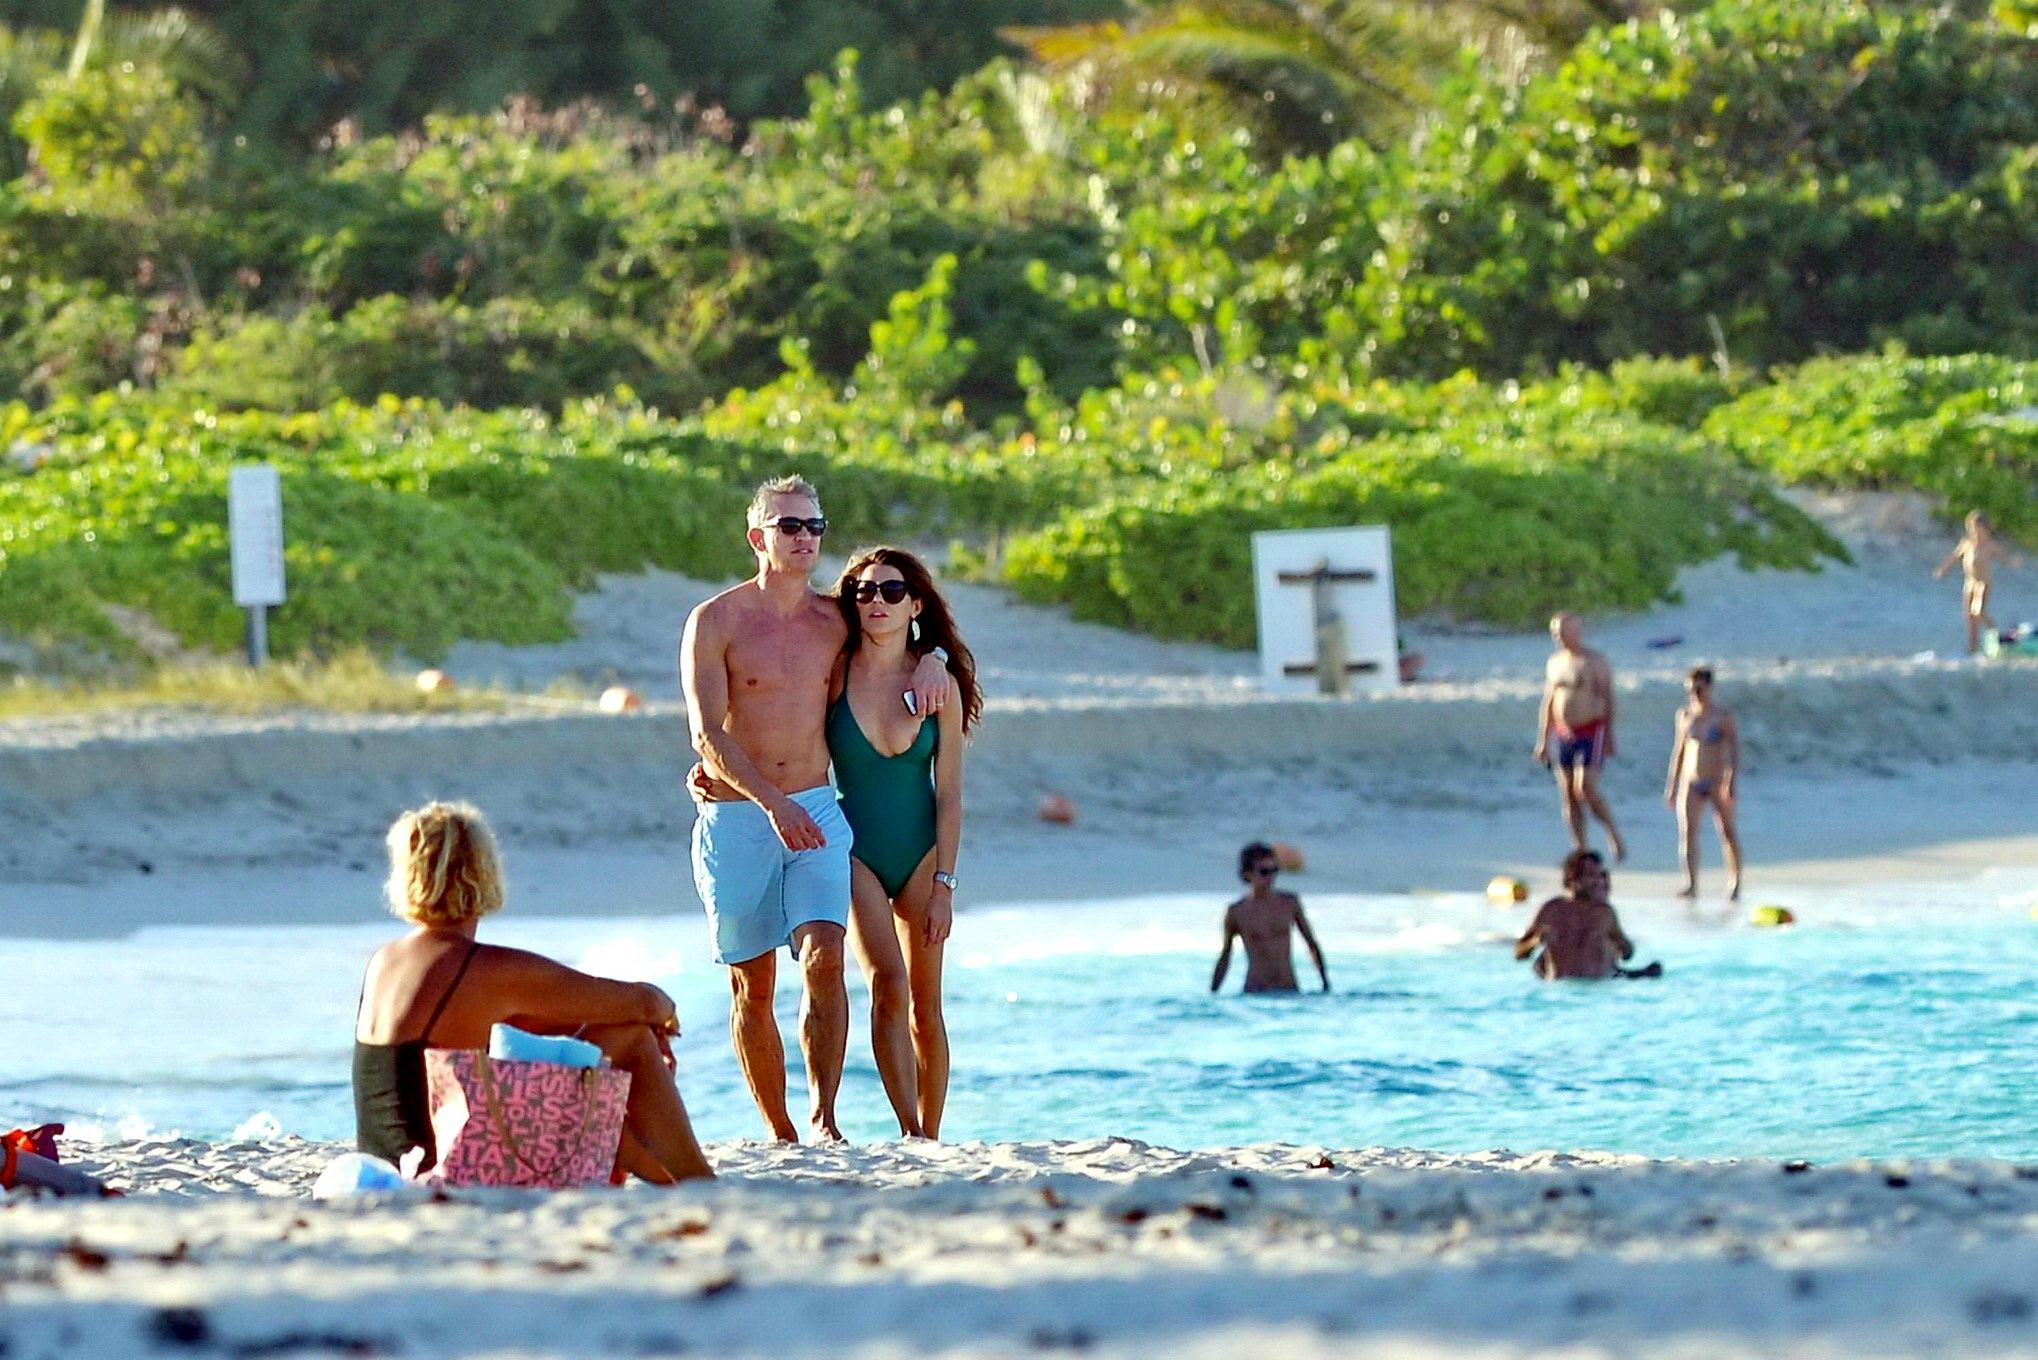 Danielle lineker nipple slip trägt einen knappen grünen Badeanzug an einem Strand in st. b
 #75206073